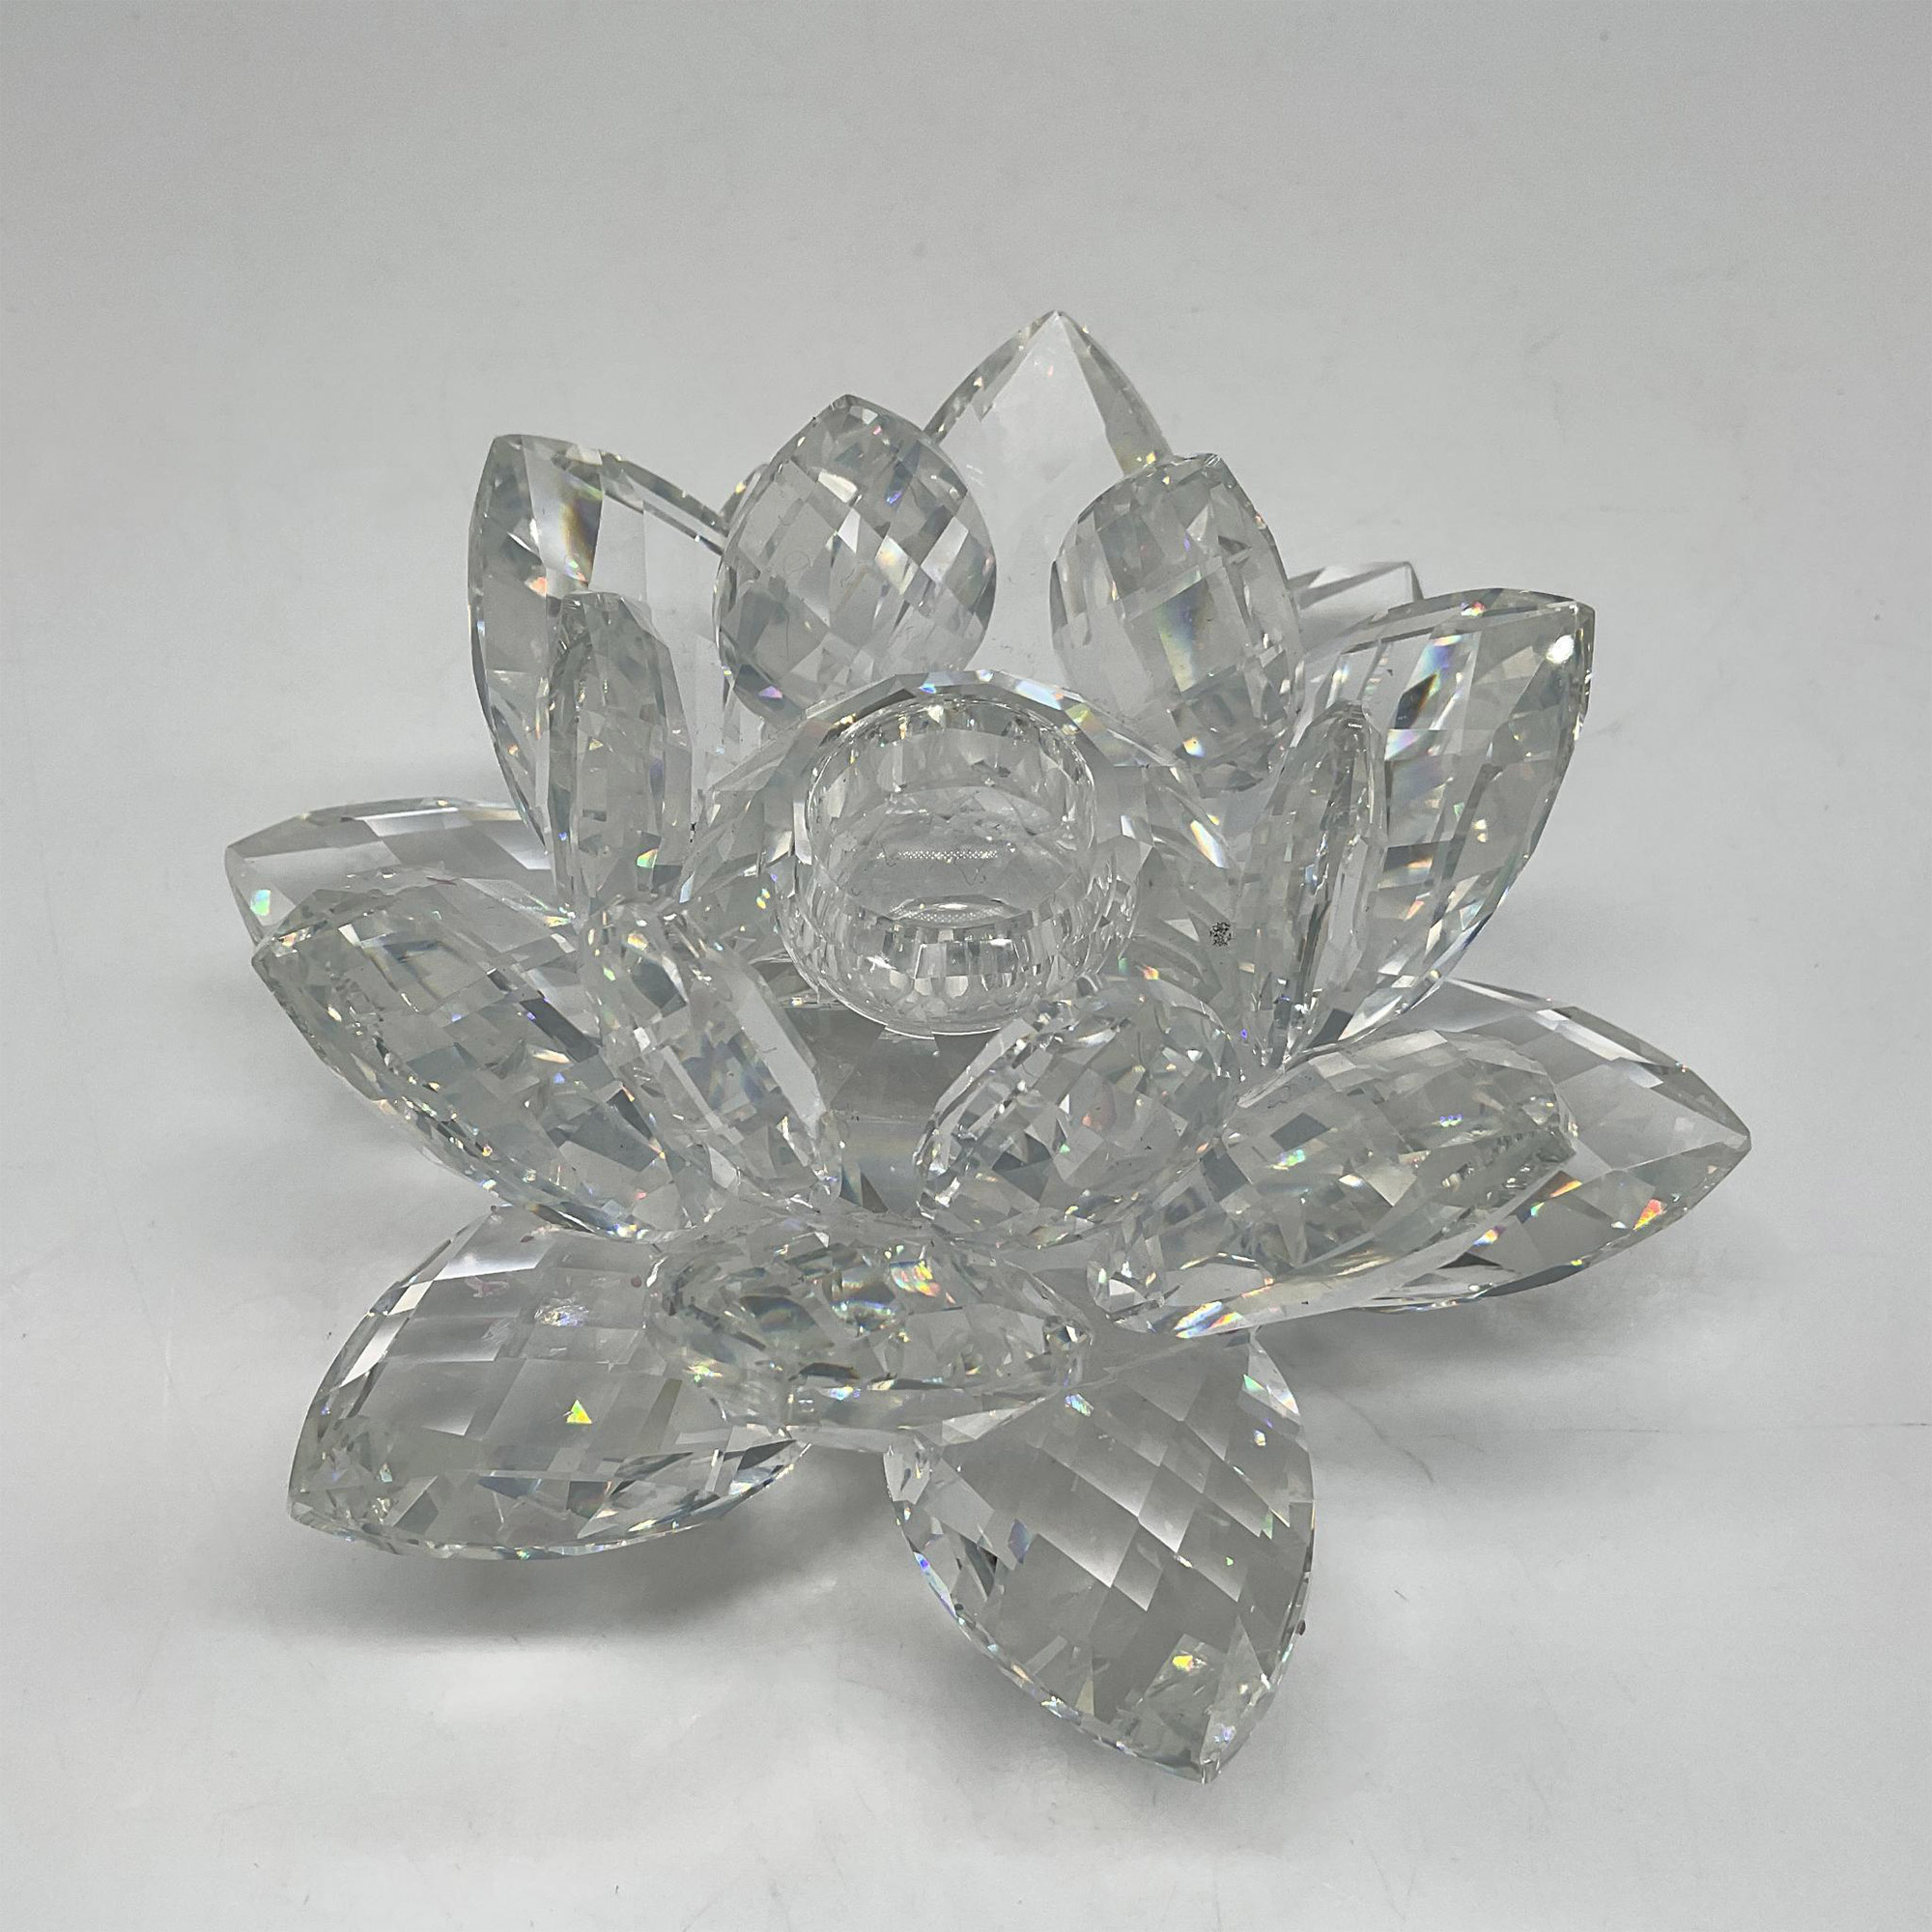 Swarovski Silver Crystal Candle Holder, Large Waterlily - Image 2 of 4